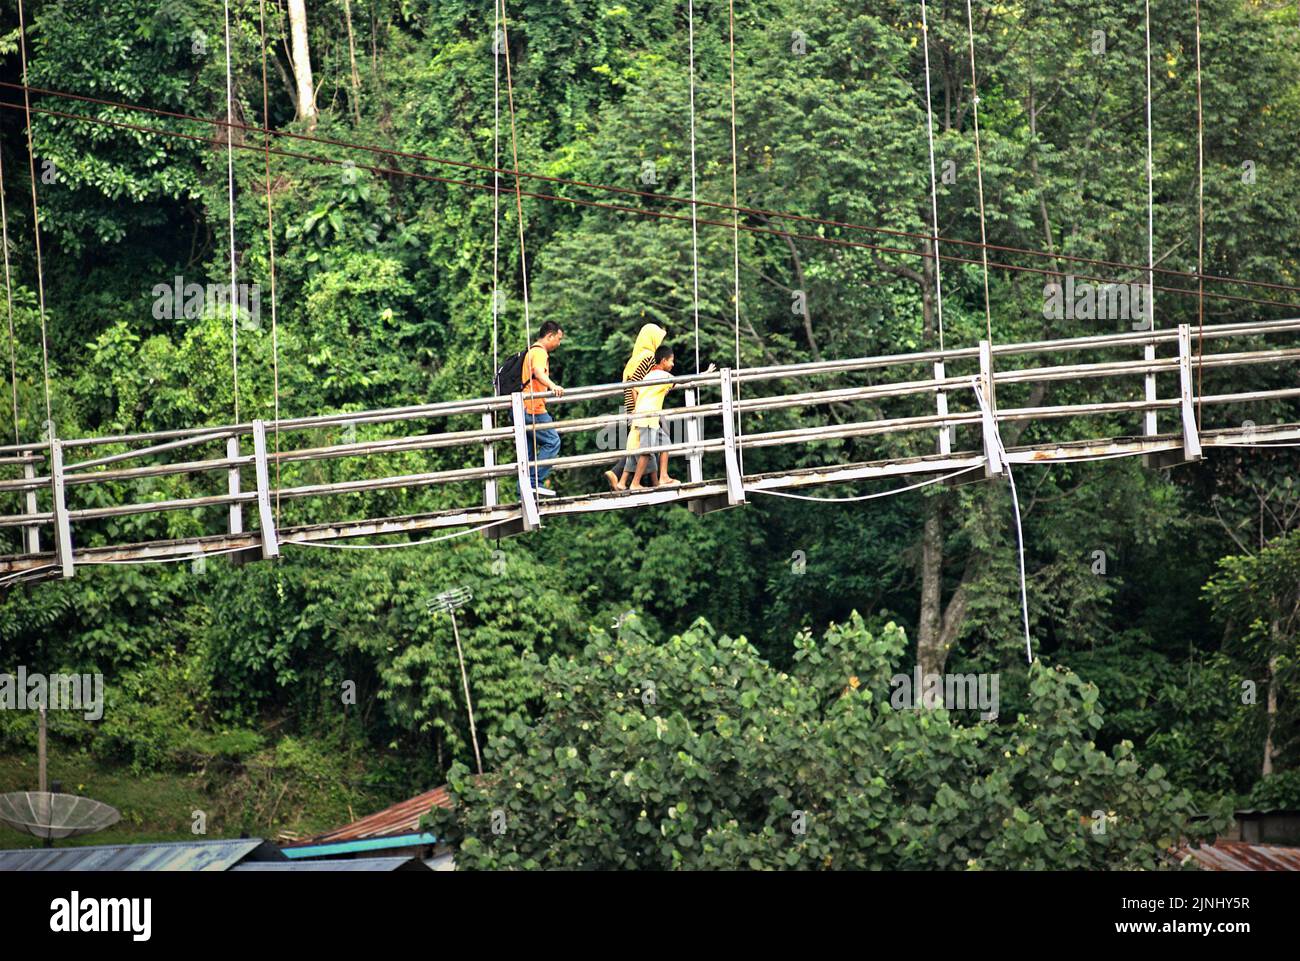 People walking on a hanging bridge, crossing over Bahorok river in Bukit Lawang, Bahorok, Langkat, North Sumatra, Indonesia. Stock Photo